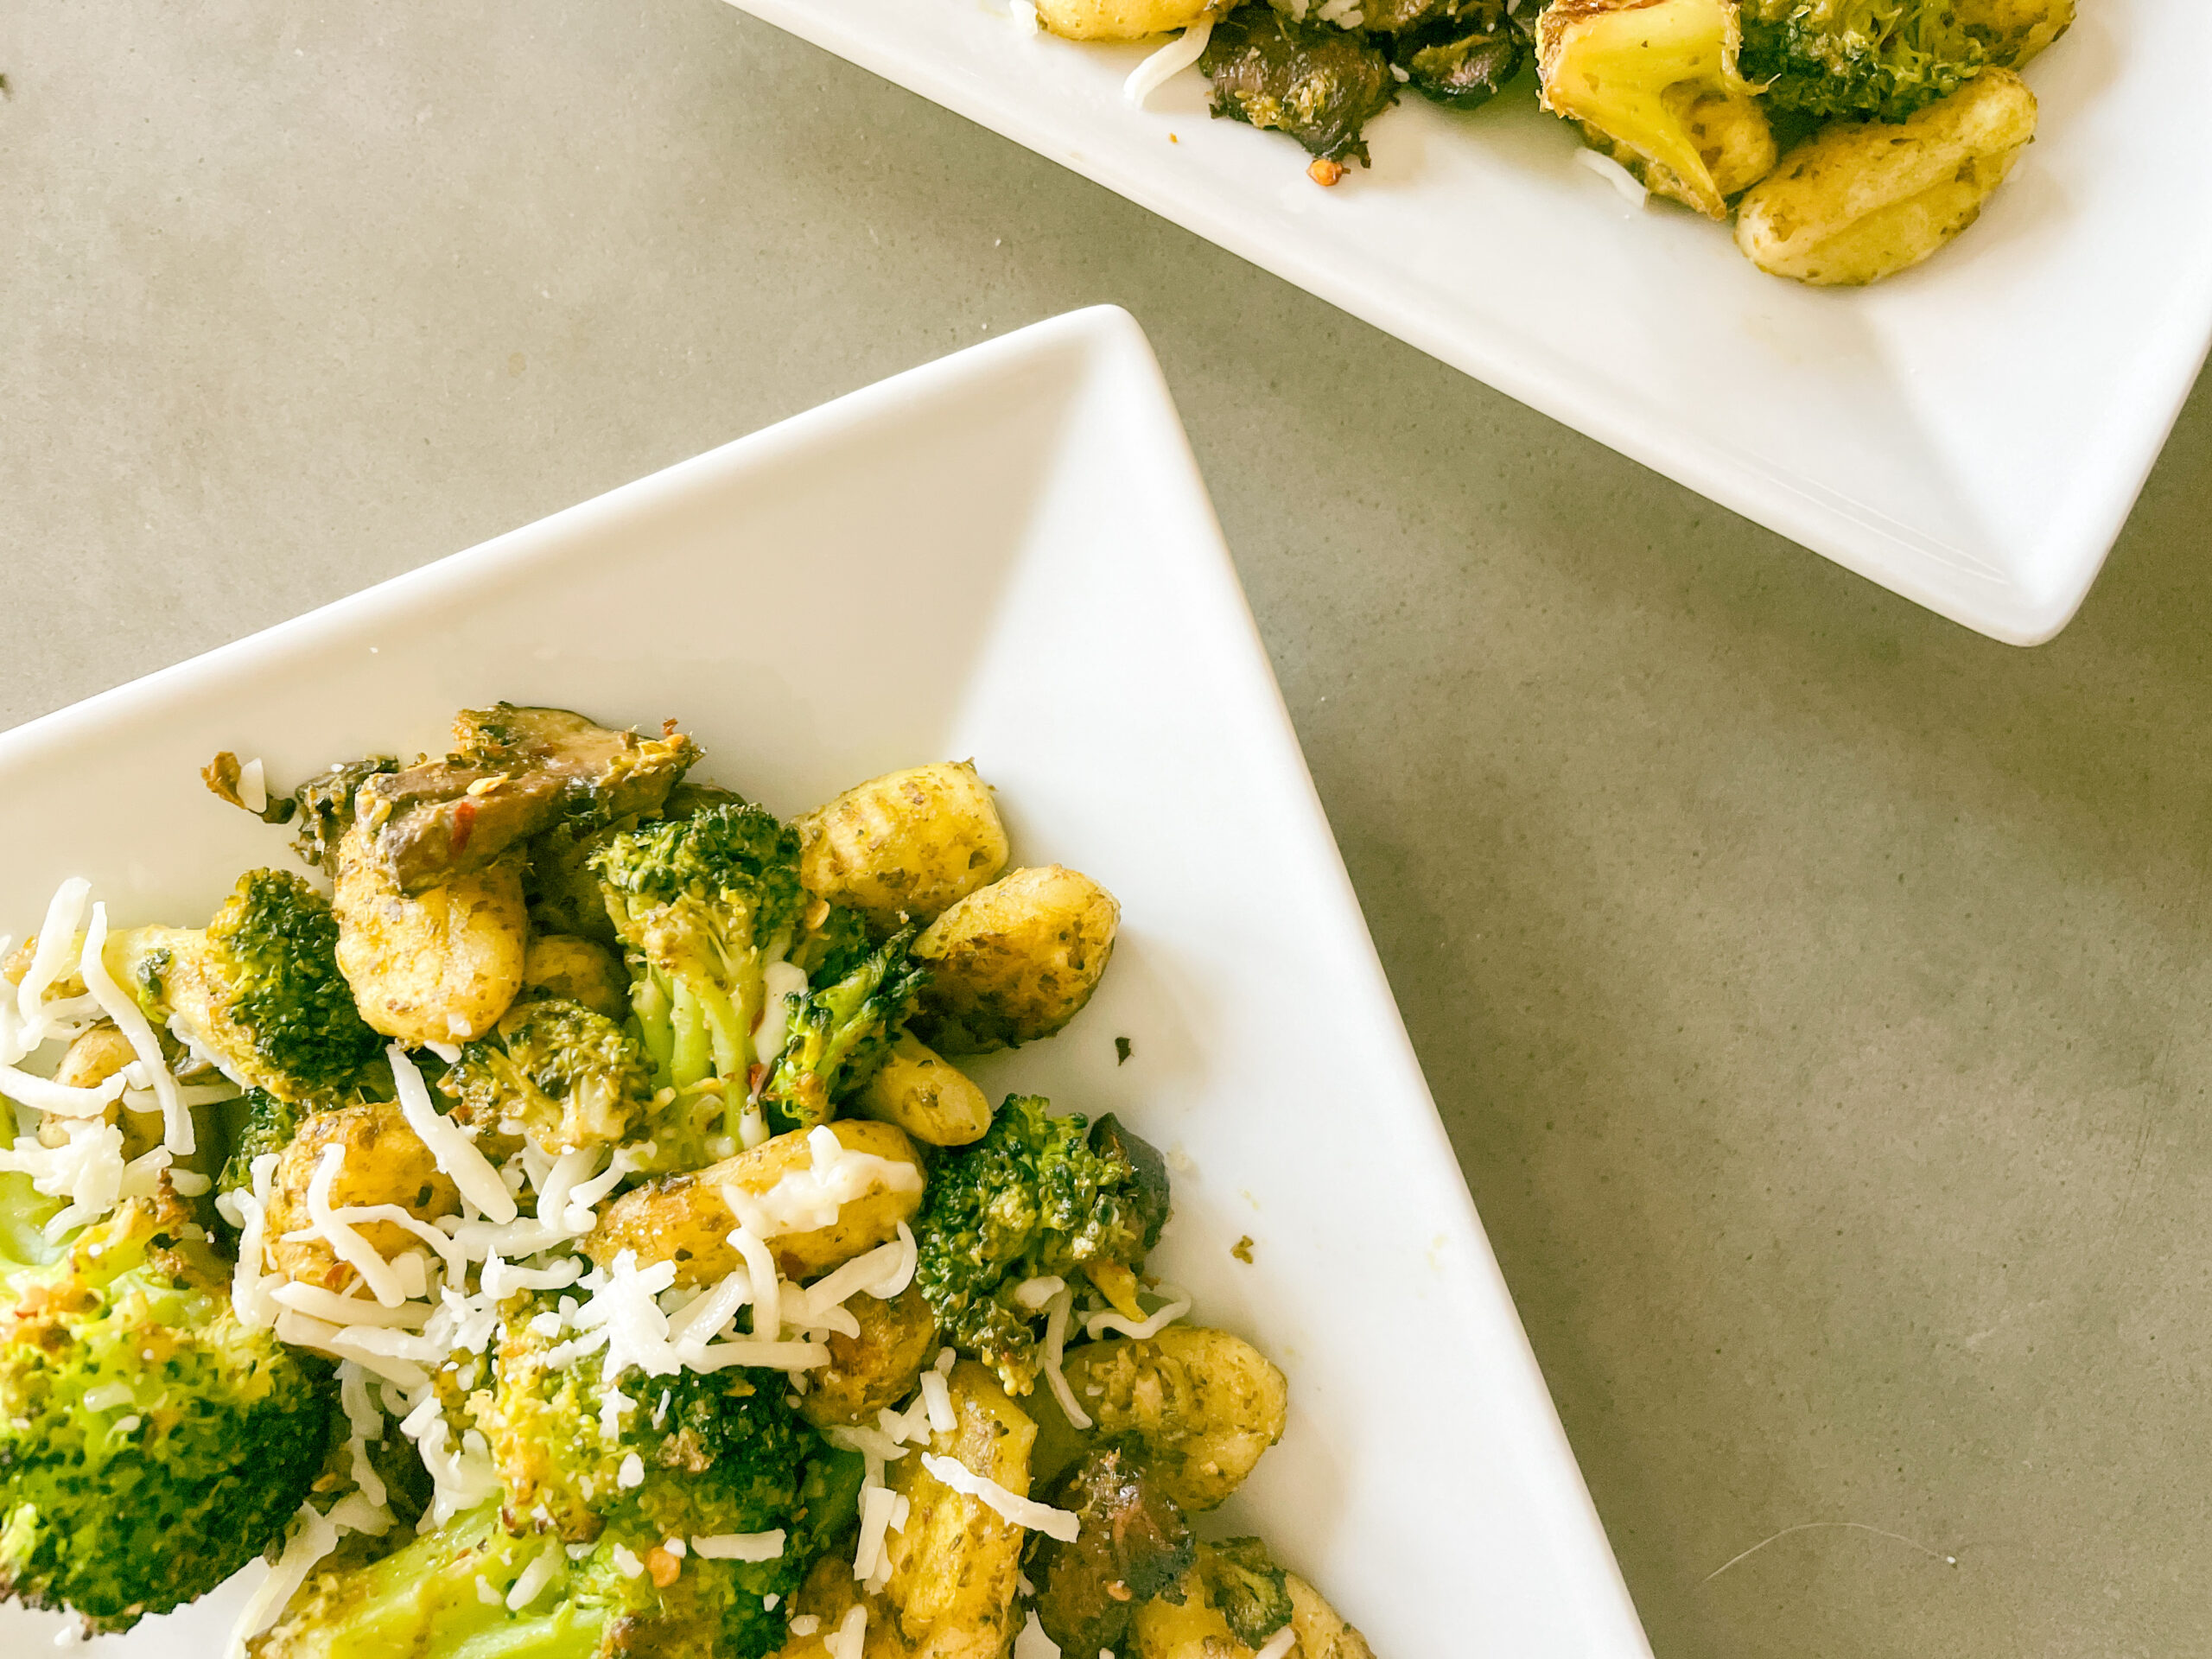 Gnocchi with broccoli, pesto and mushrooms.